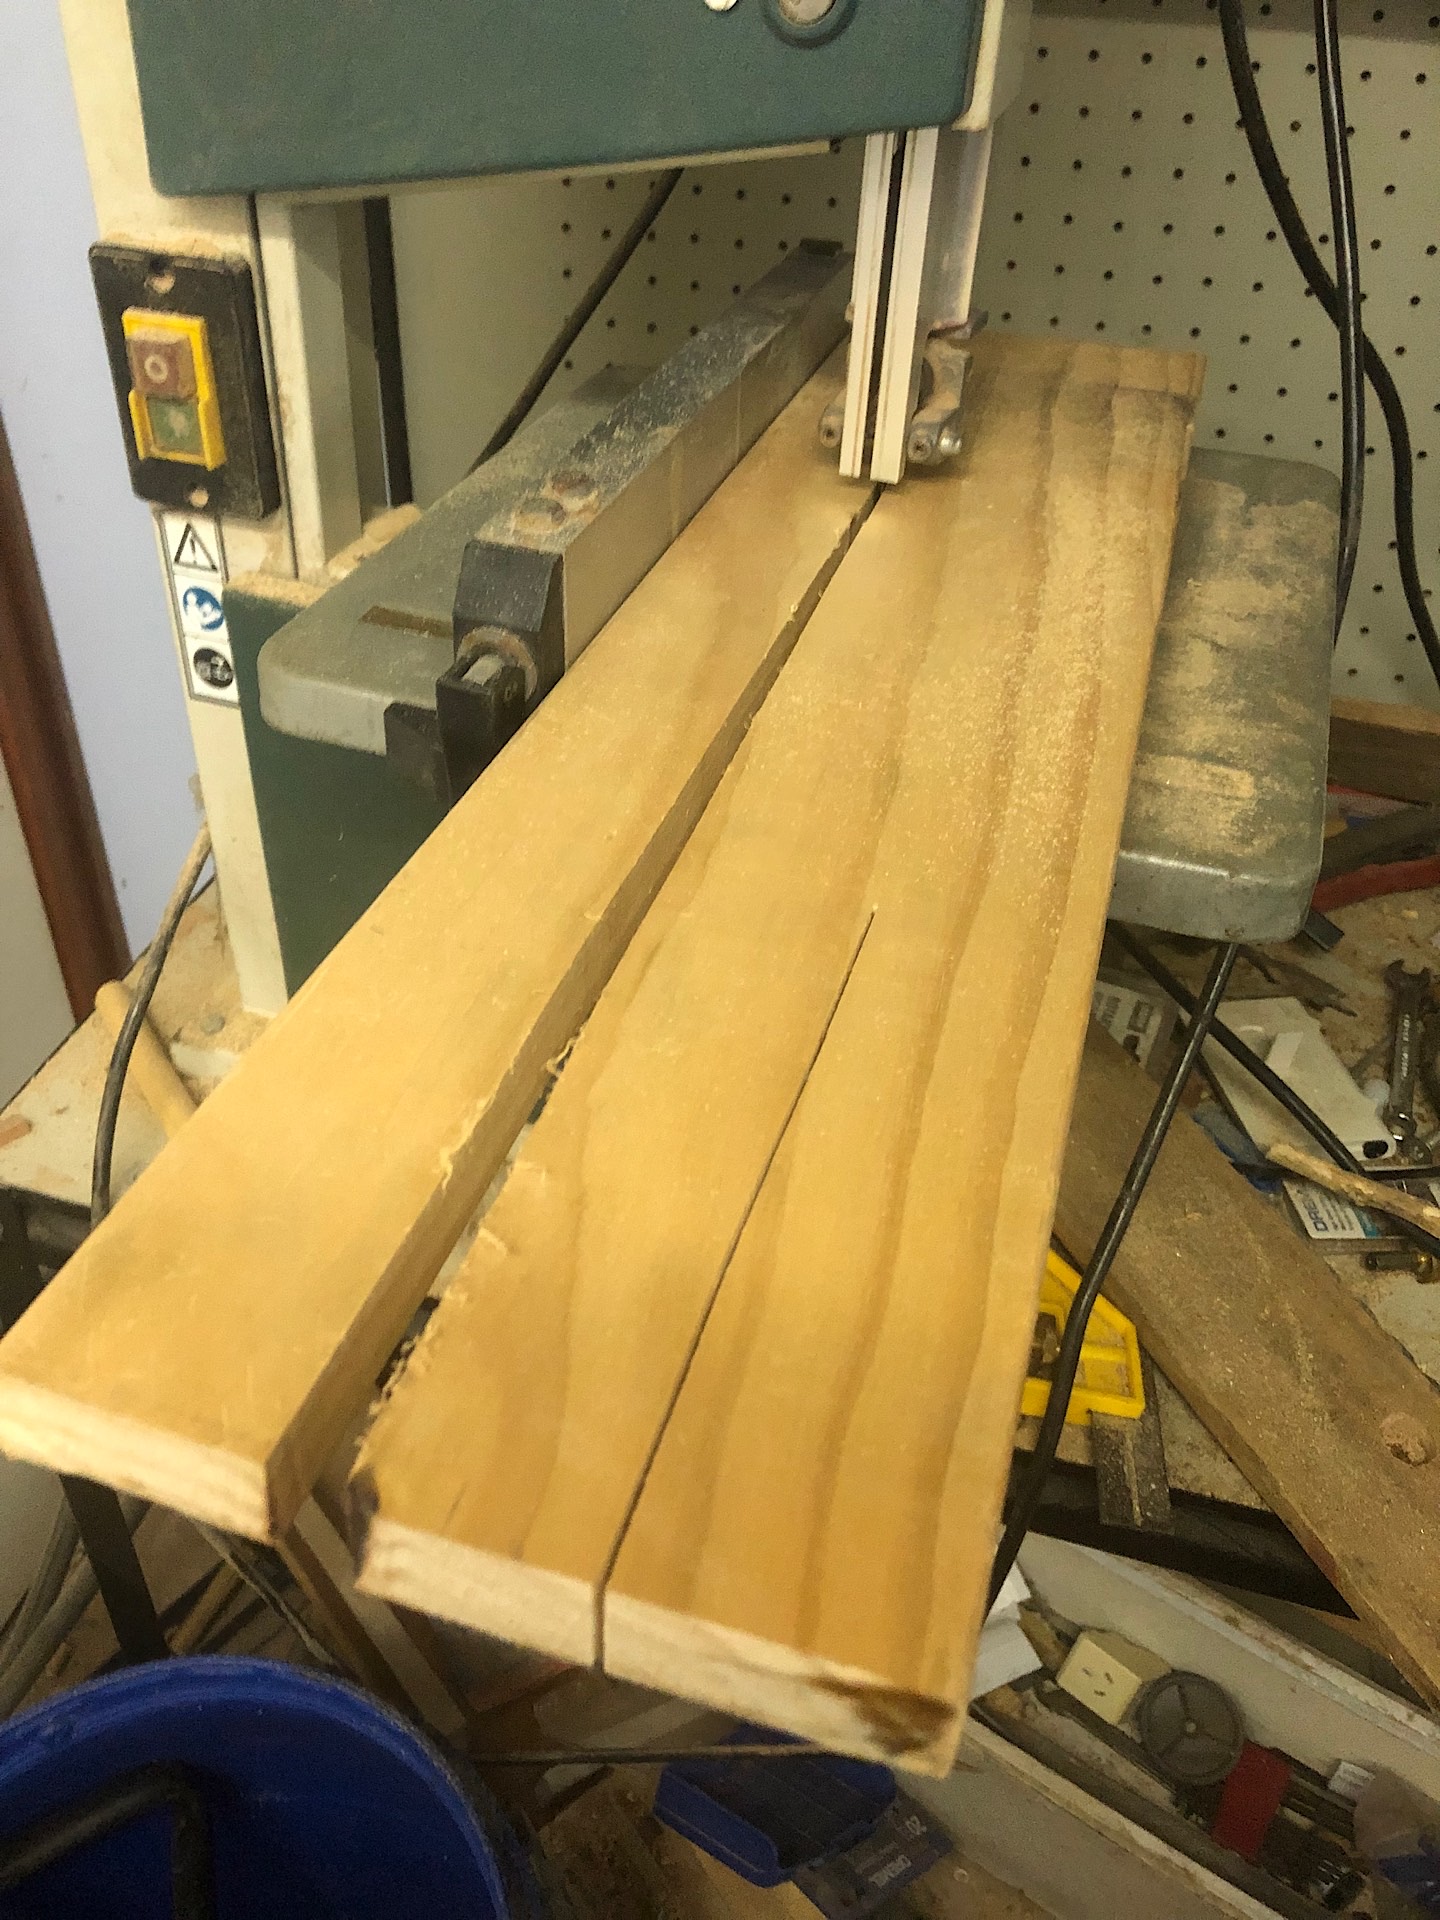 Cutting pine wood on a band saw